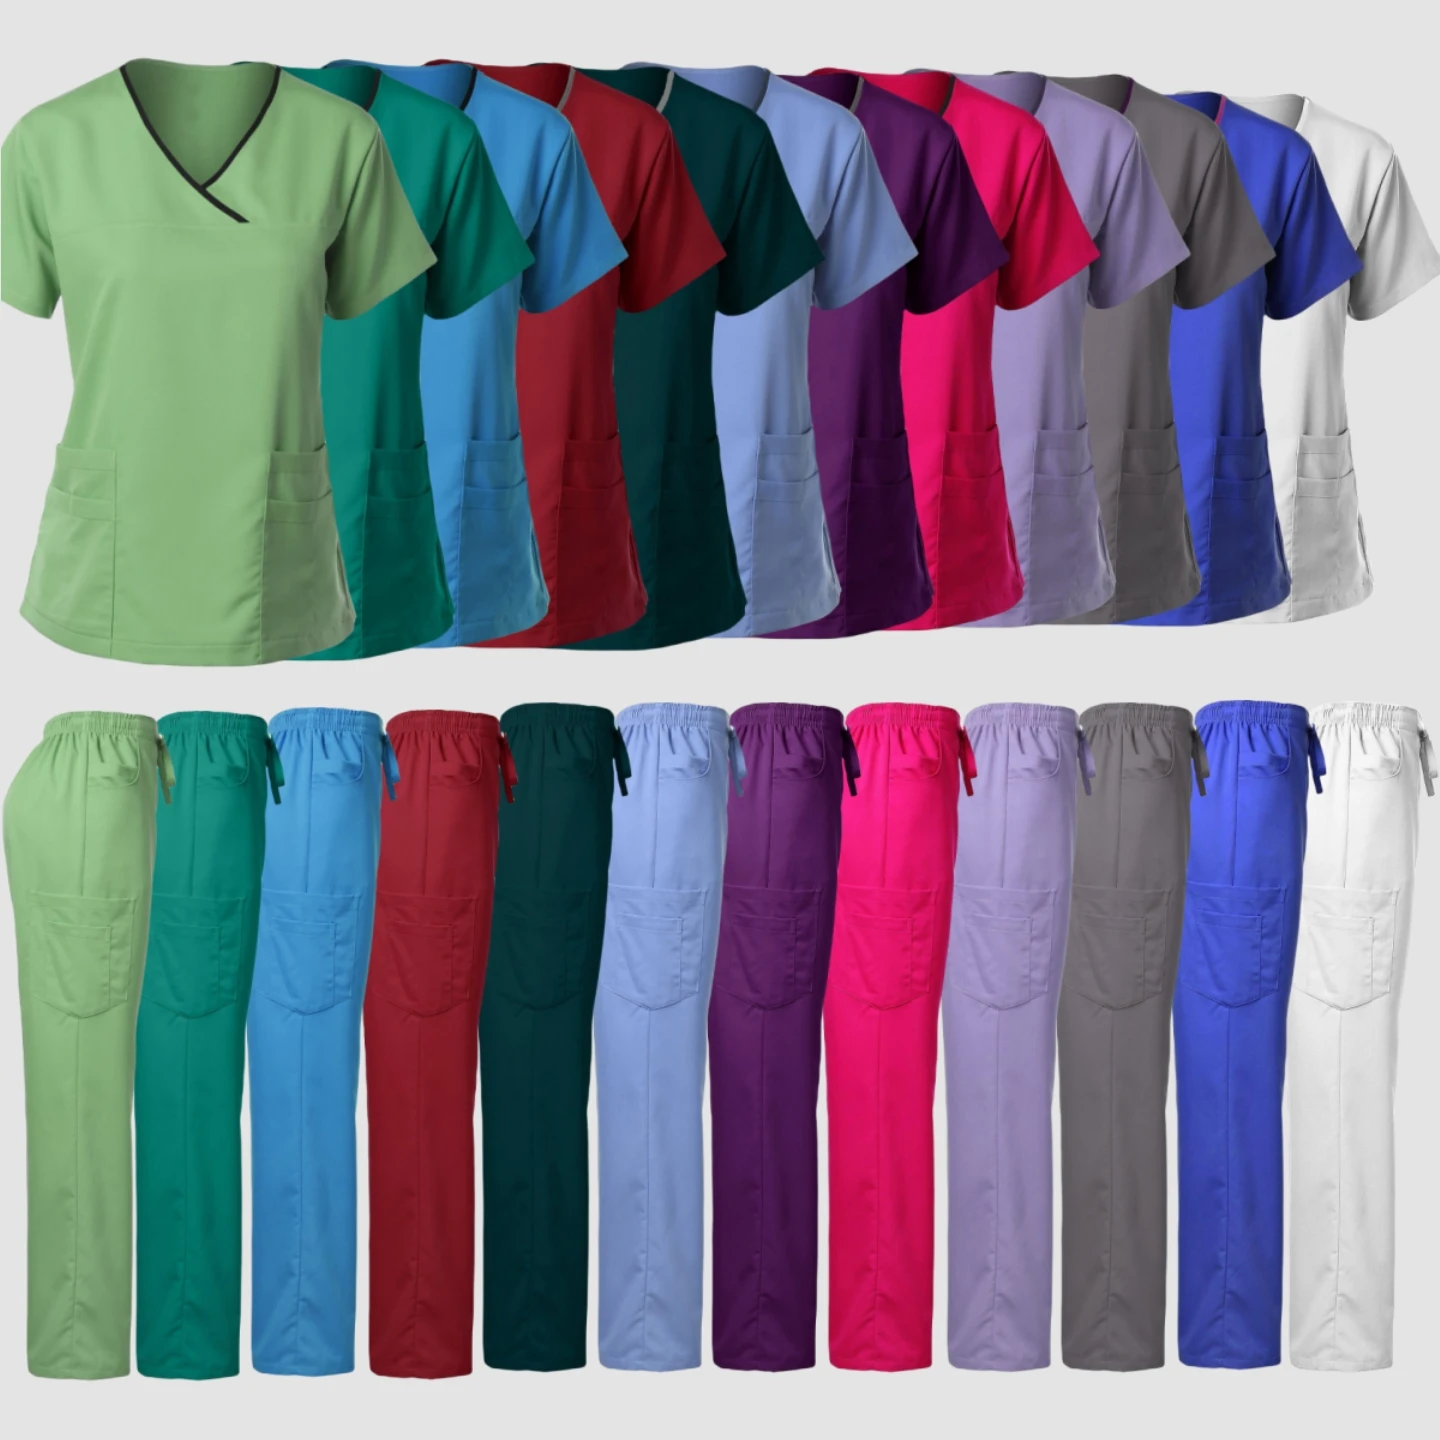 Vendita calda di alta qualità uniforme ospedaliera all'ingrosso top e pantaloni donne mediche infermieristica scrub uniformi set